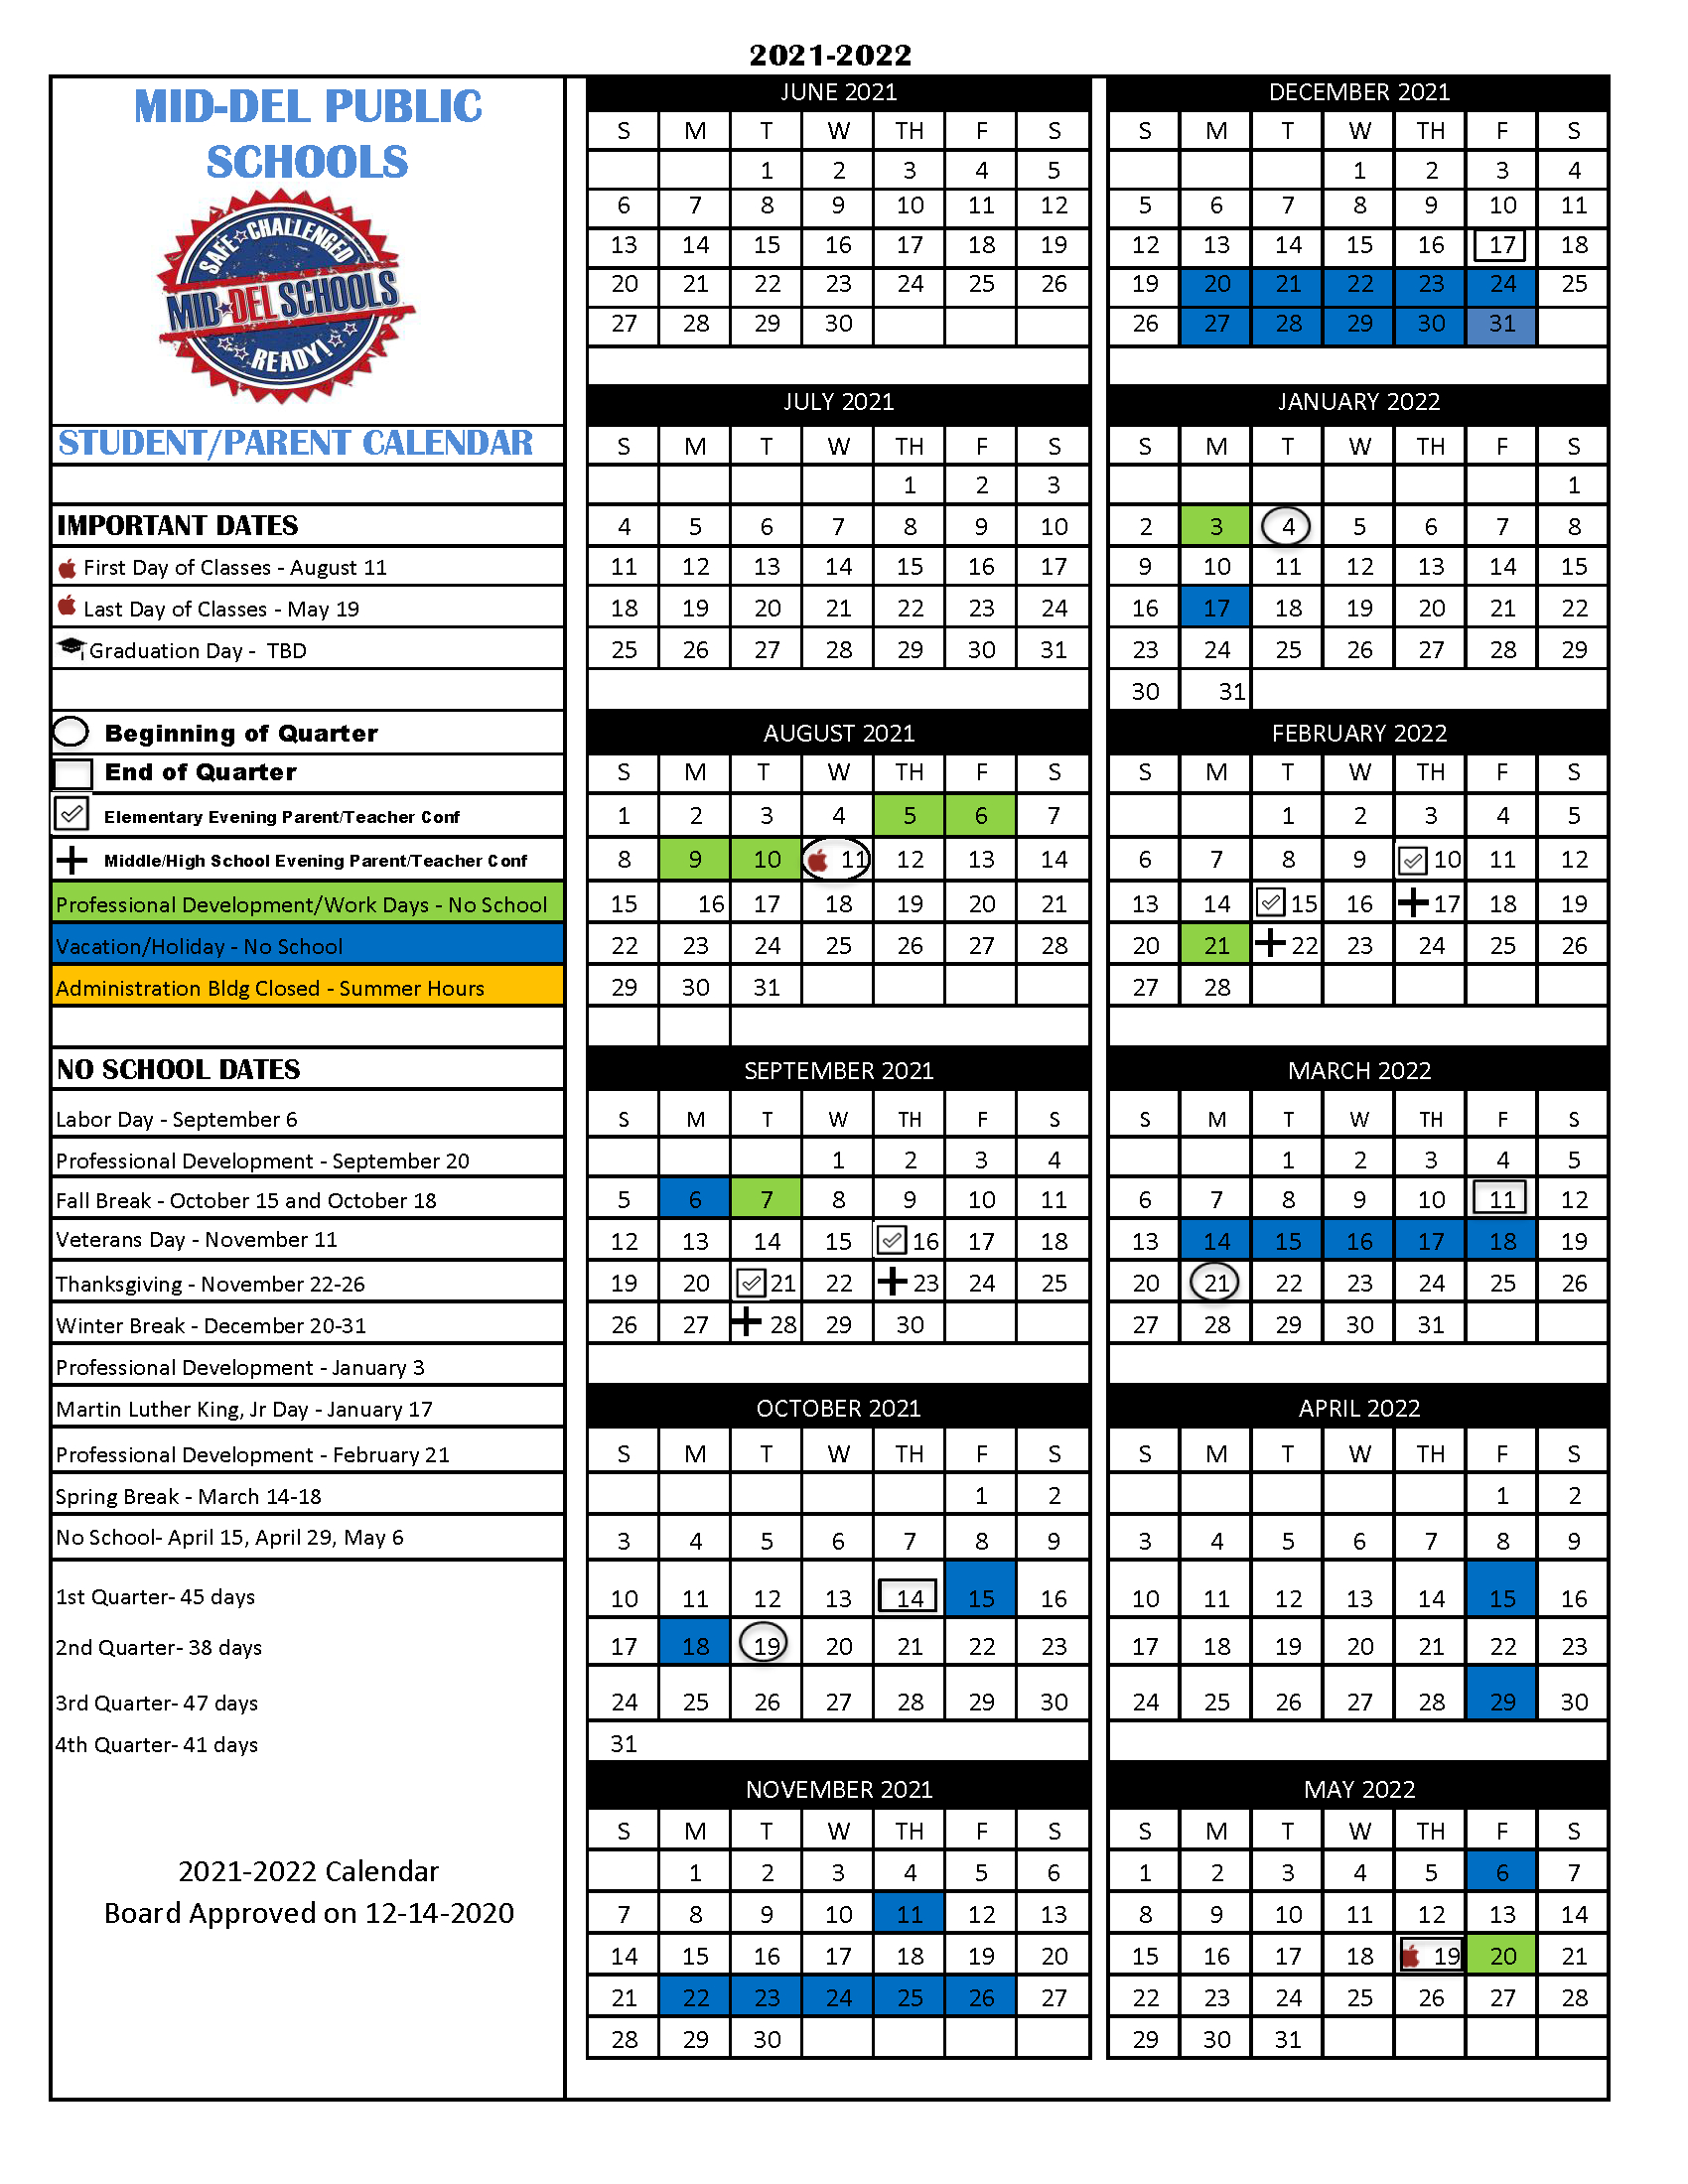 2021-2022 School Calendar | Mid-Del School District